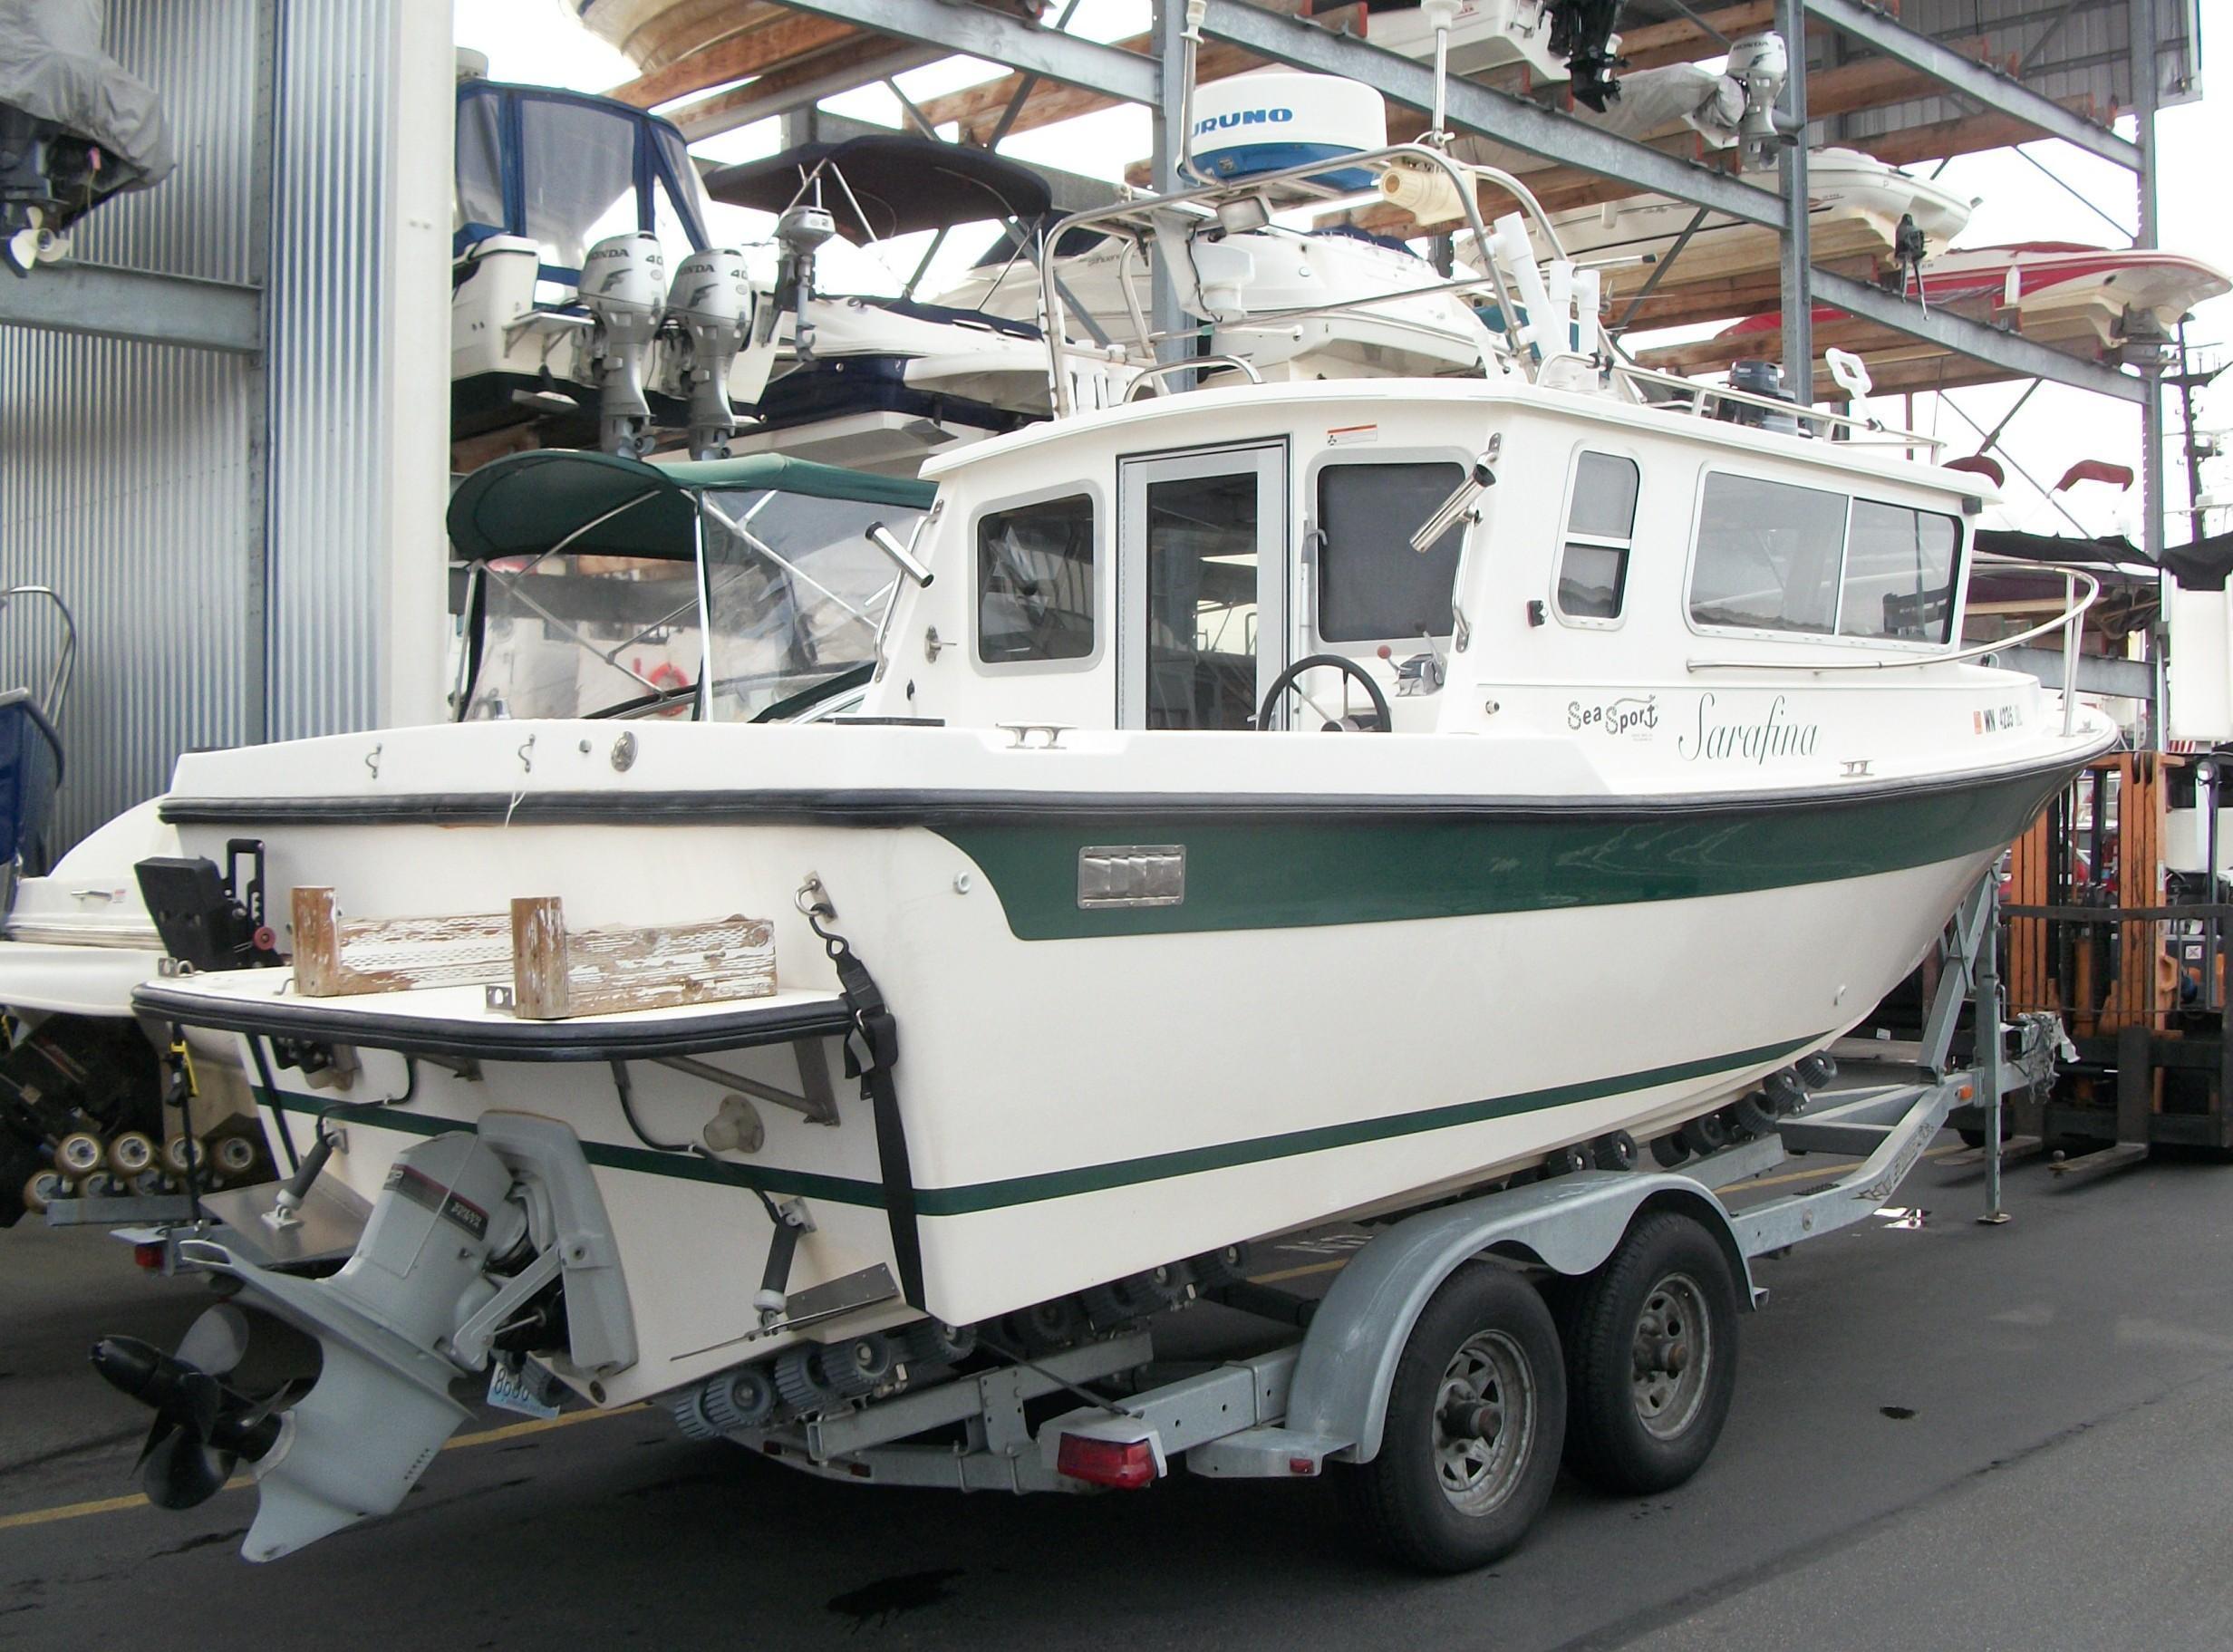 Sea Sport Explorer 2400, Seattle